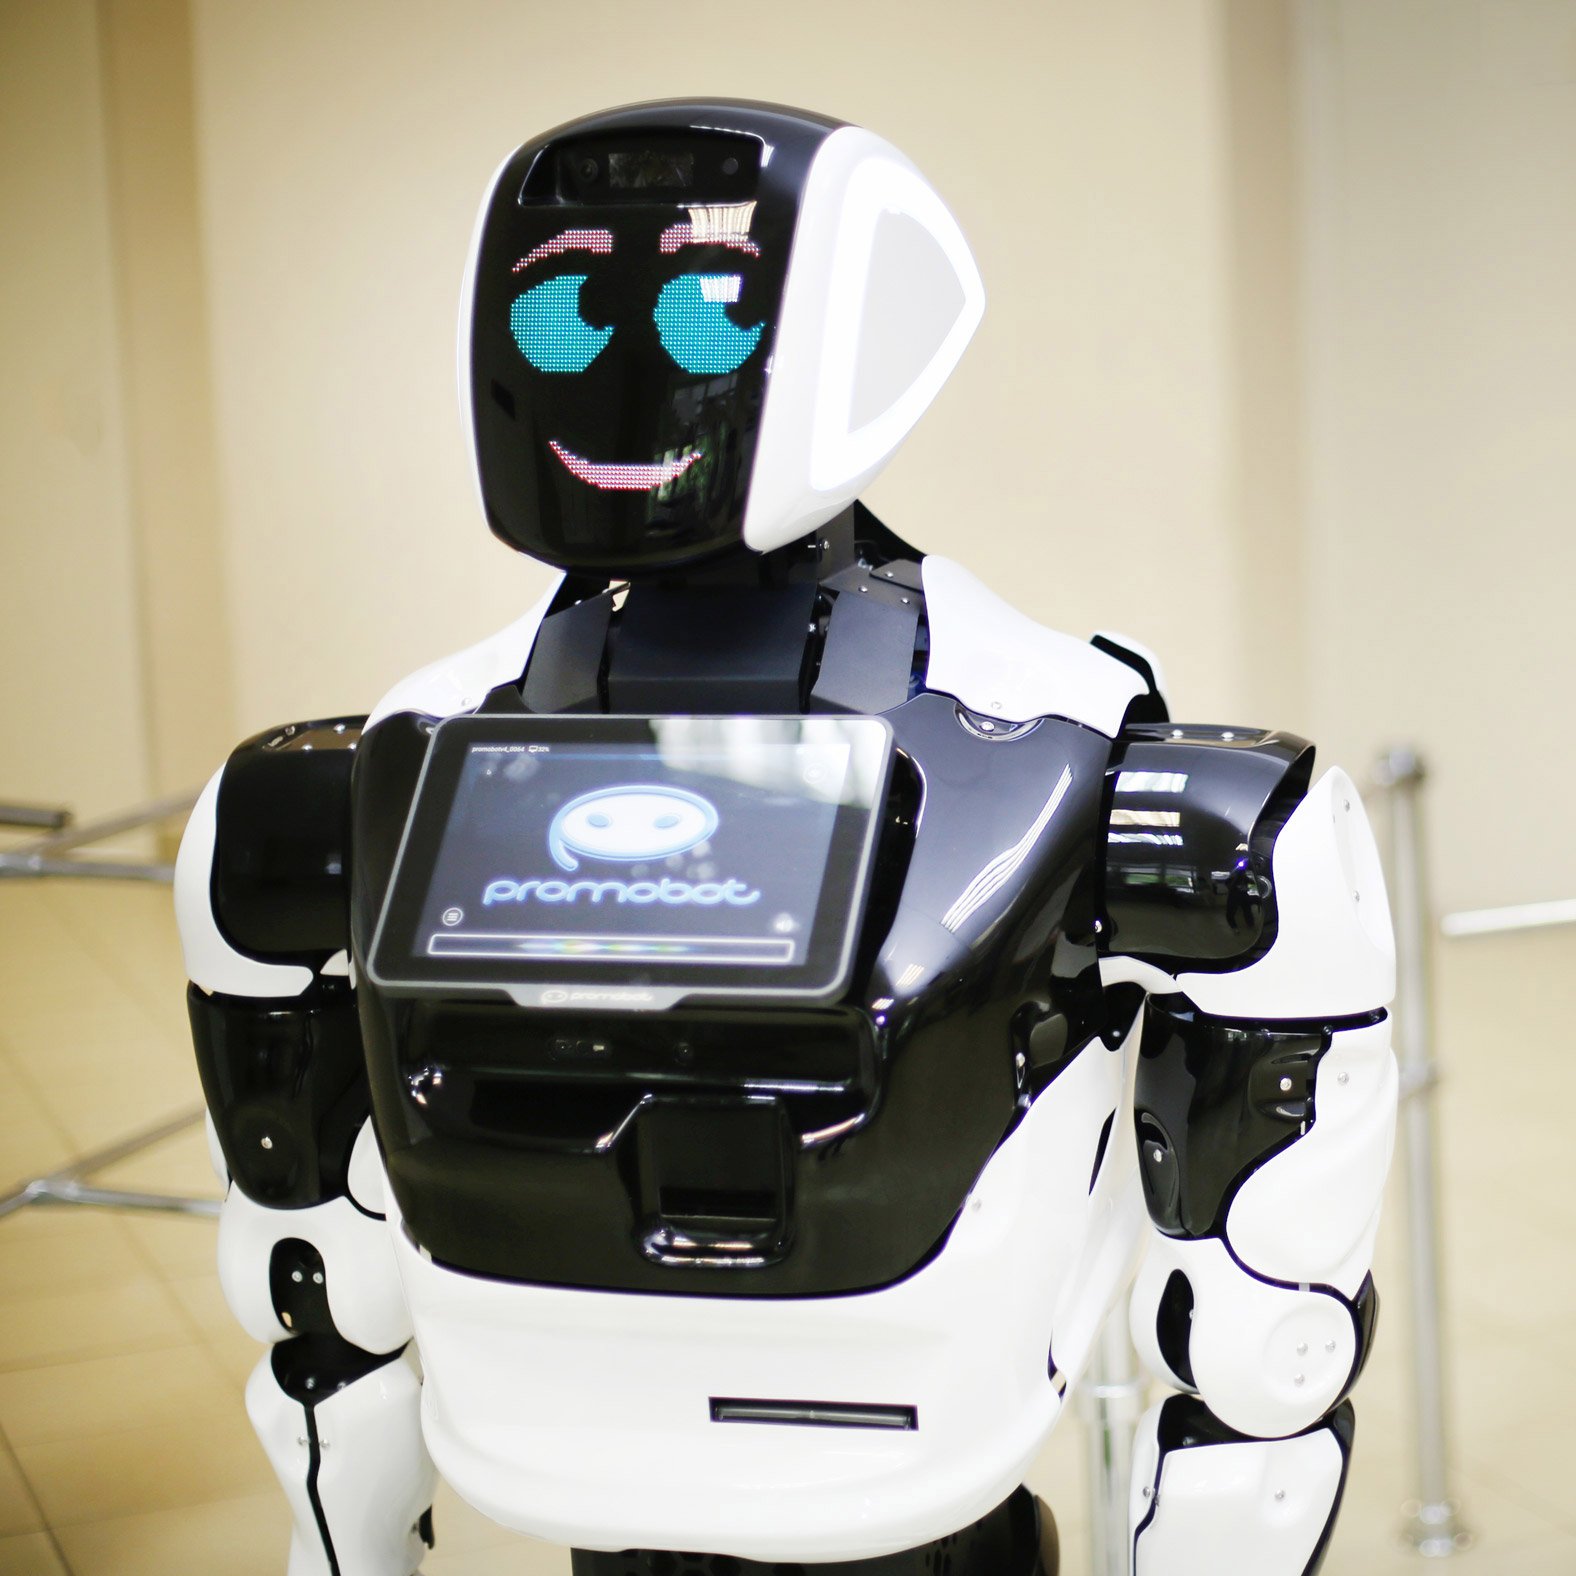 Promobot robot by self-driving Tesla on way to in Las Vegas